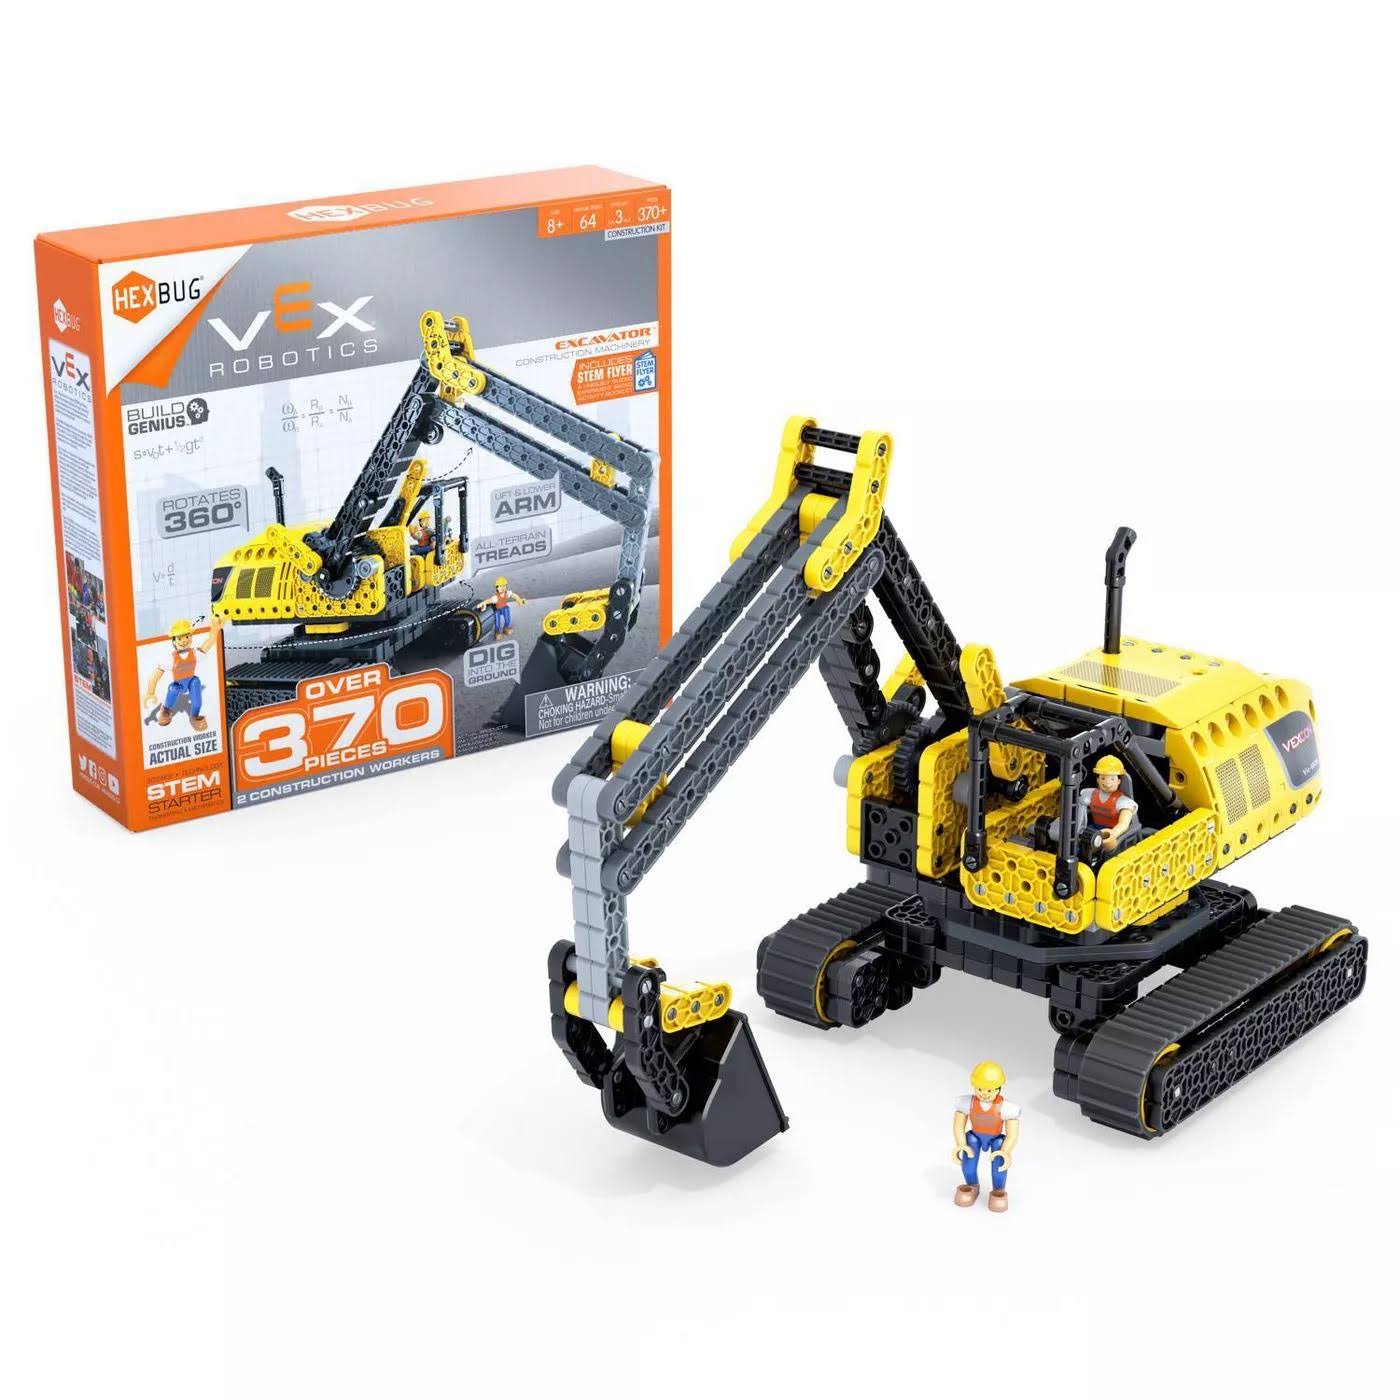 HEXBUG - Vex Robotics Excavator